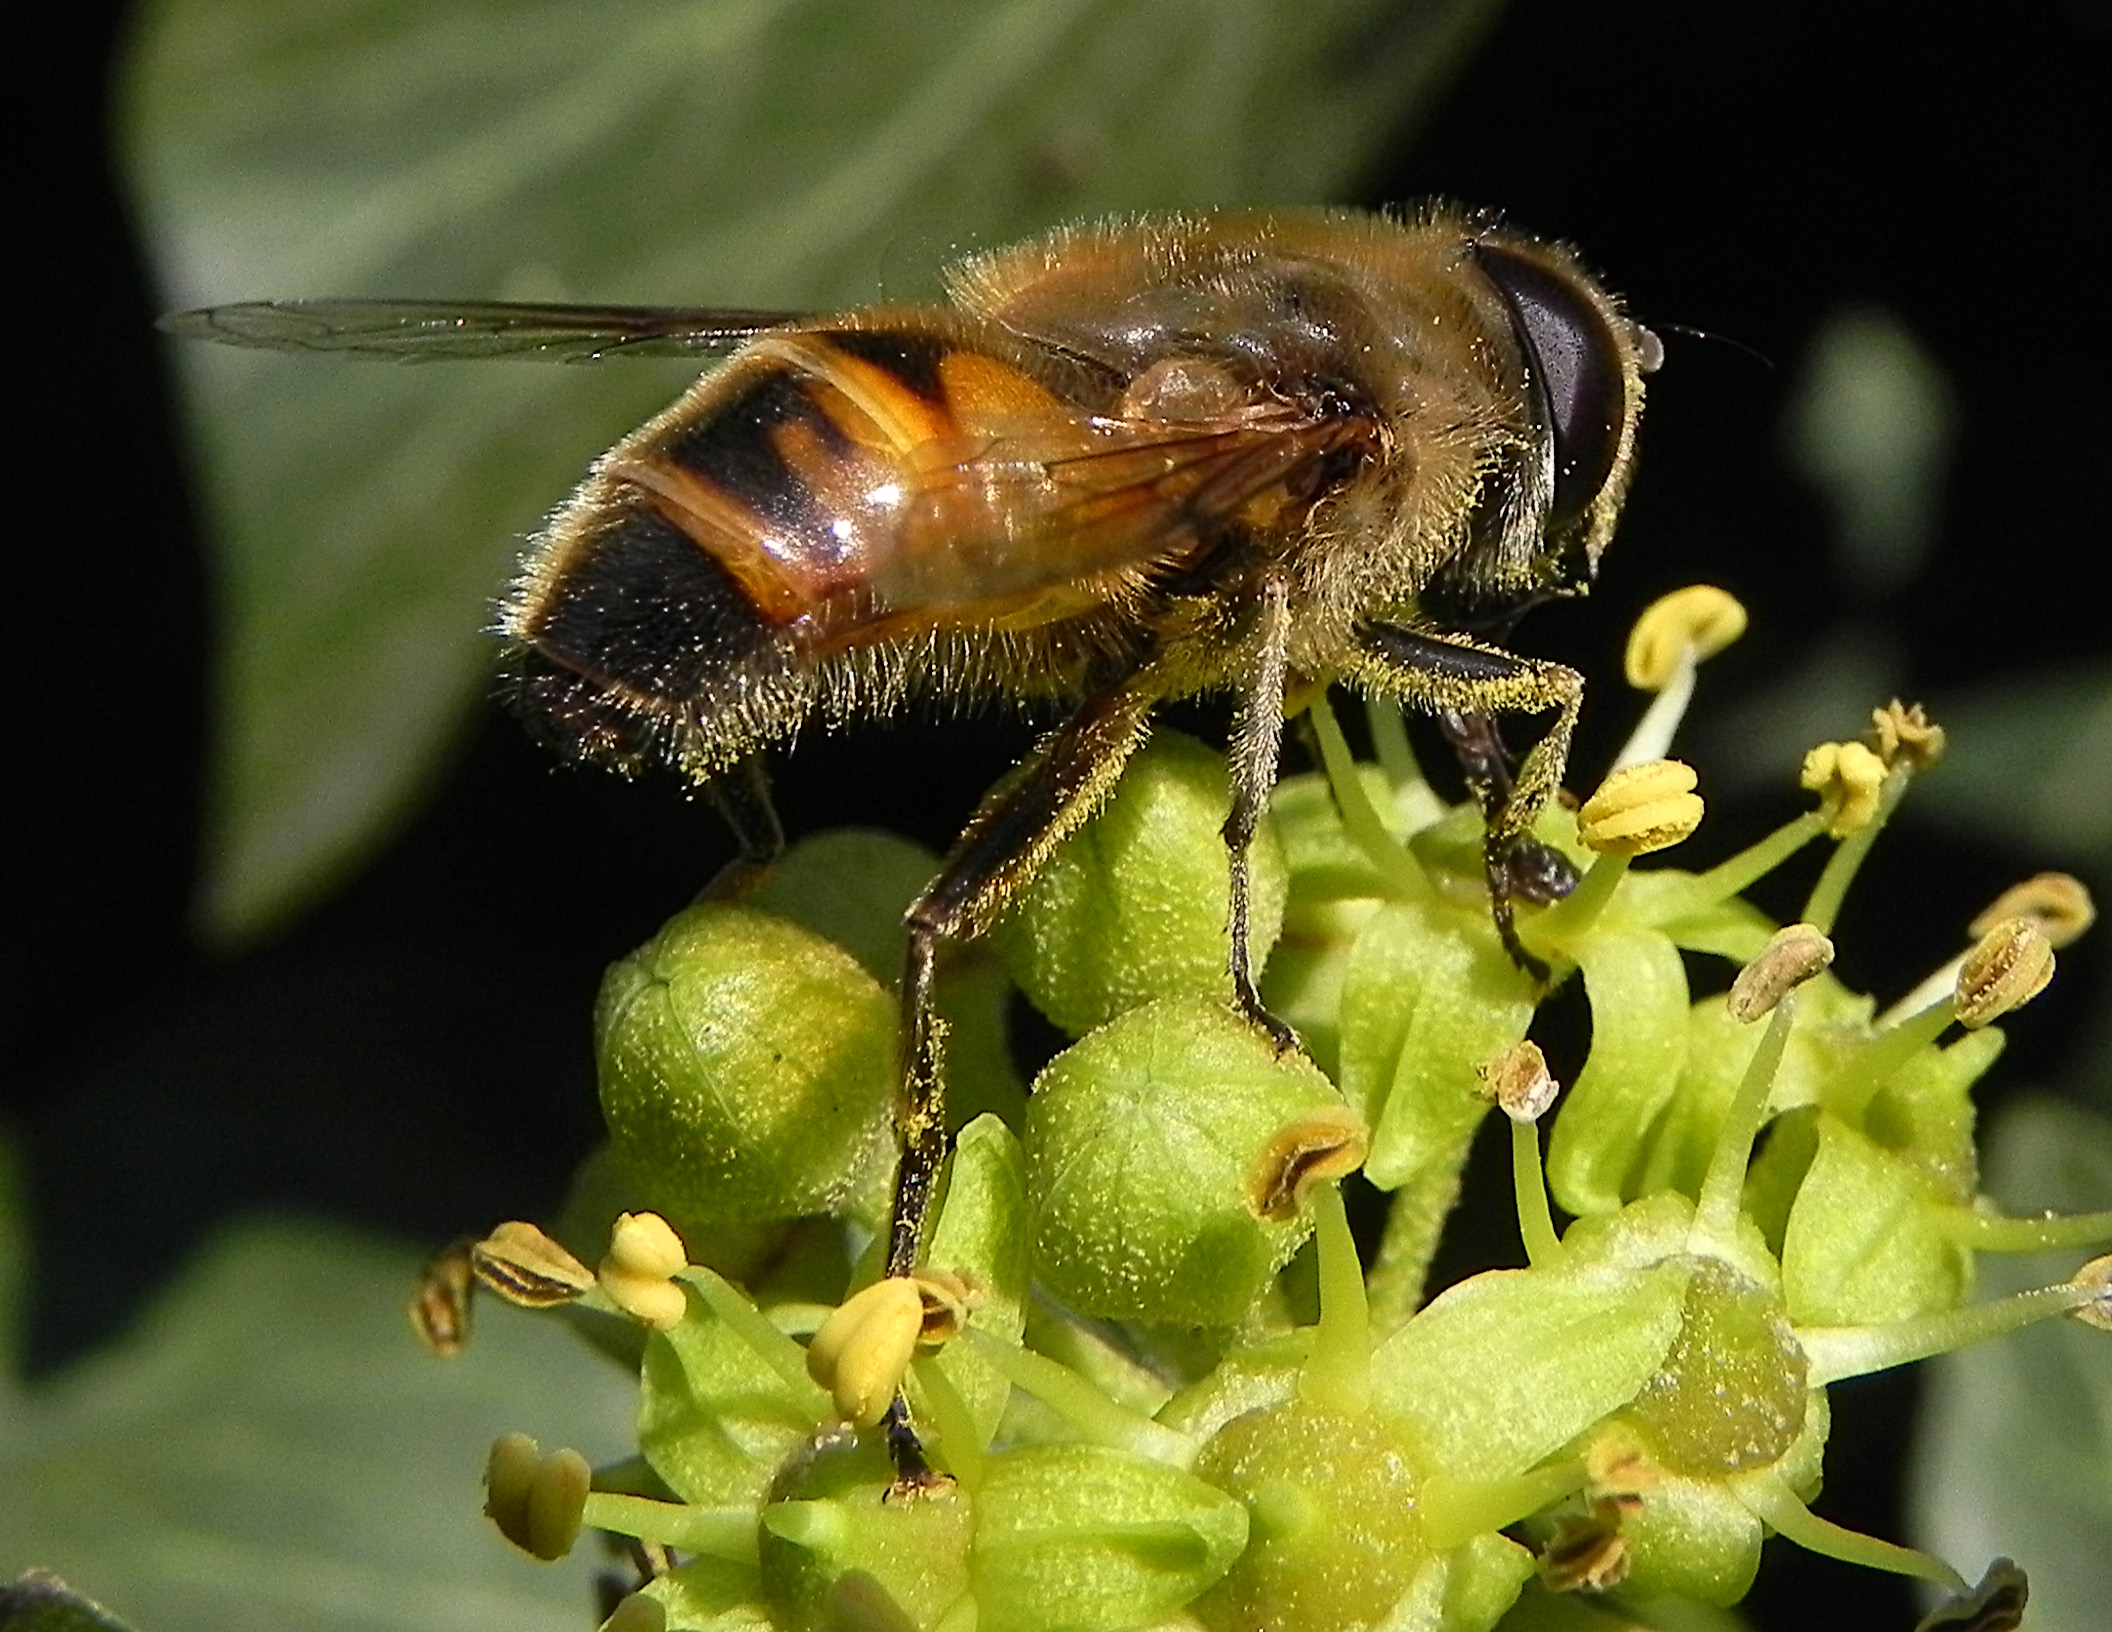 Fam. Syrphidae, Italia, 1 Nov 2014, by Paolo Beneventi